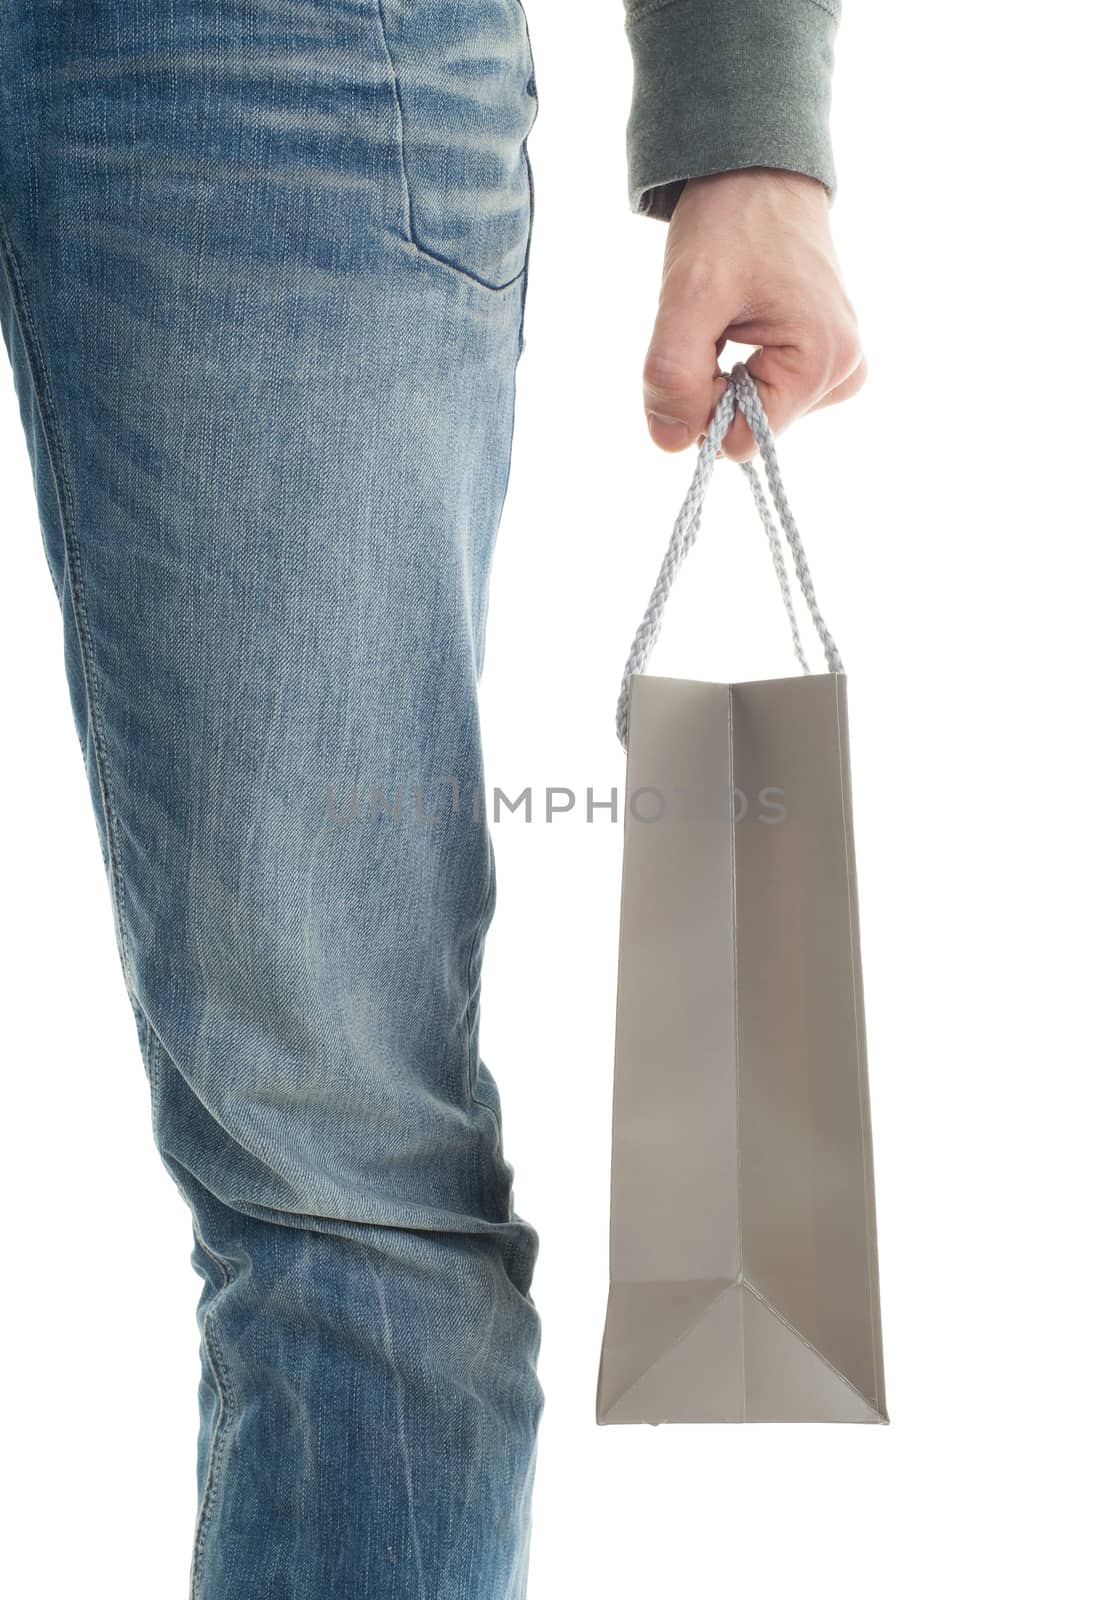 Shopping man, gift bag, isolated on white